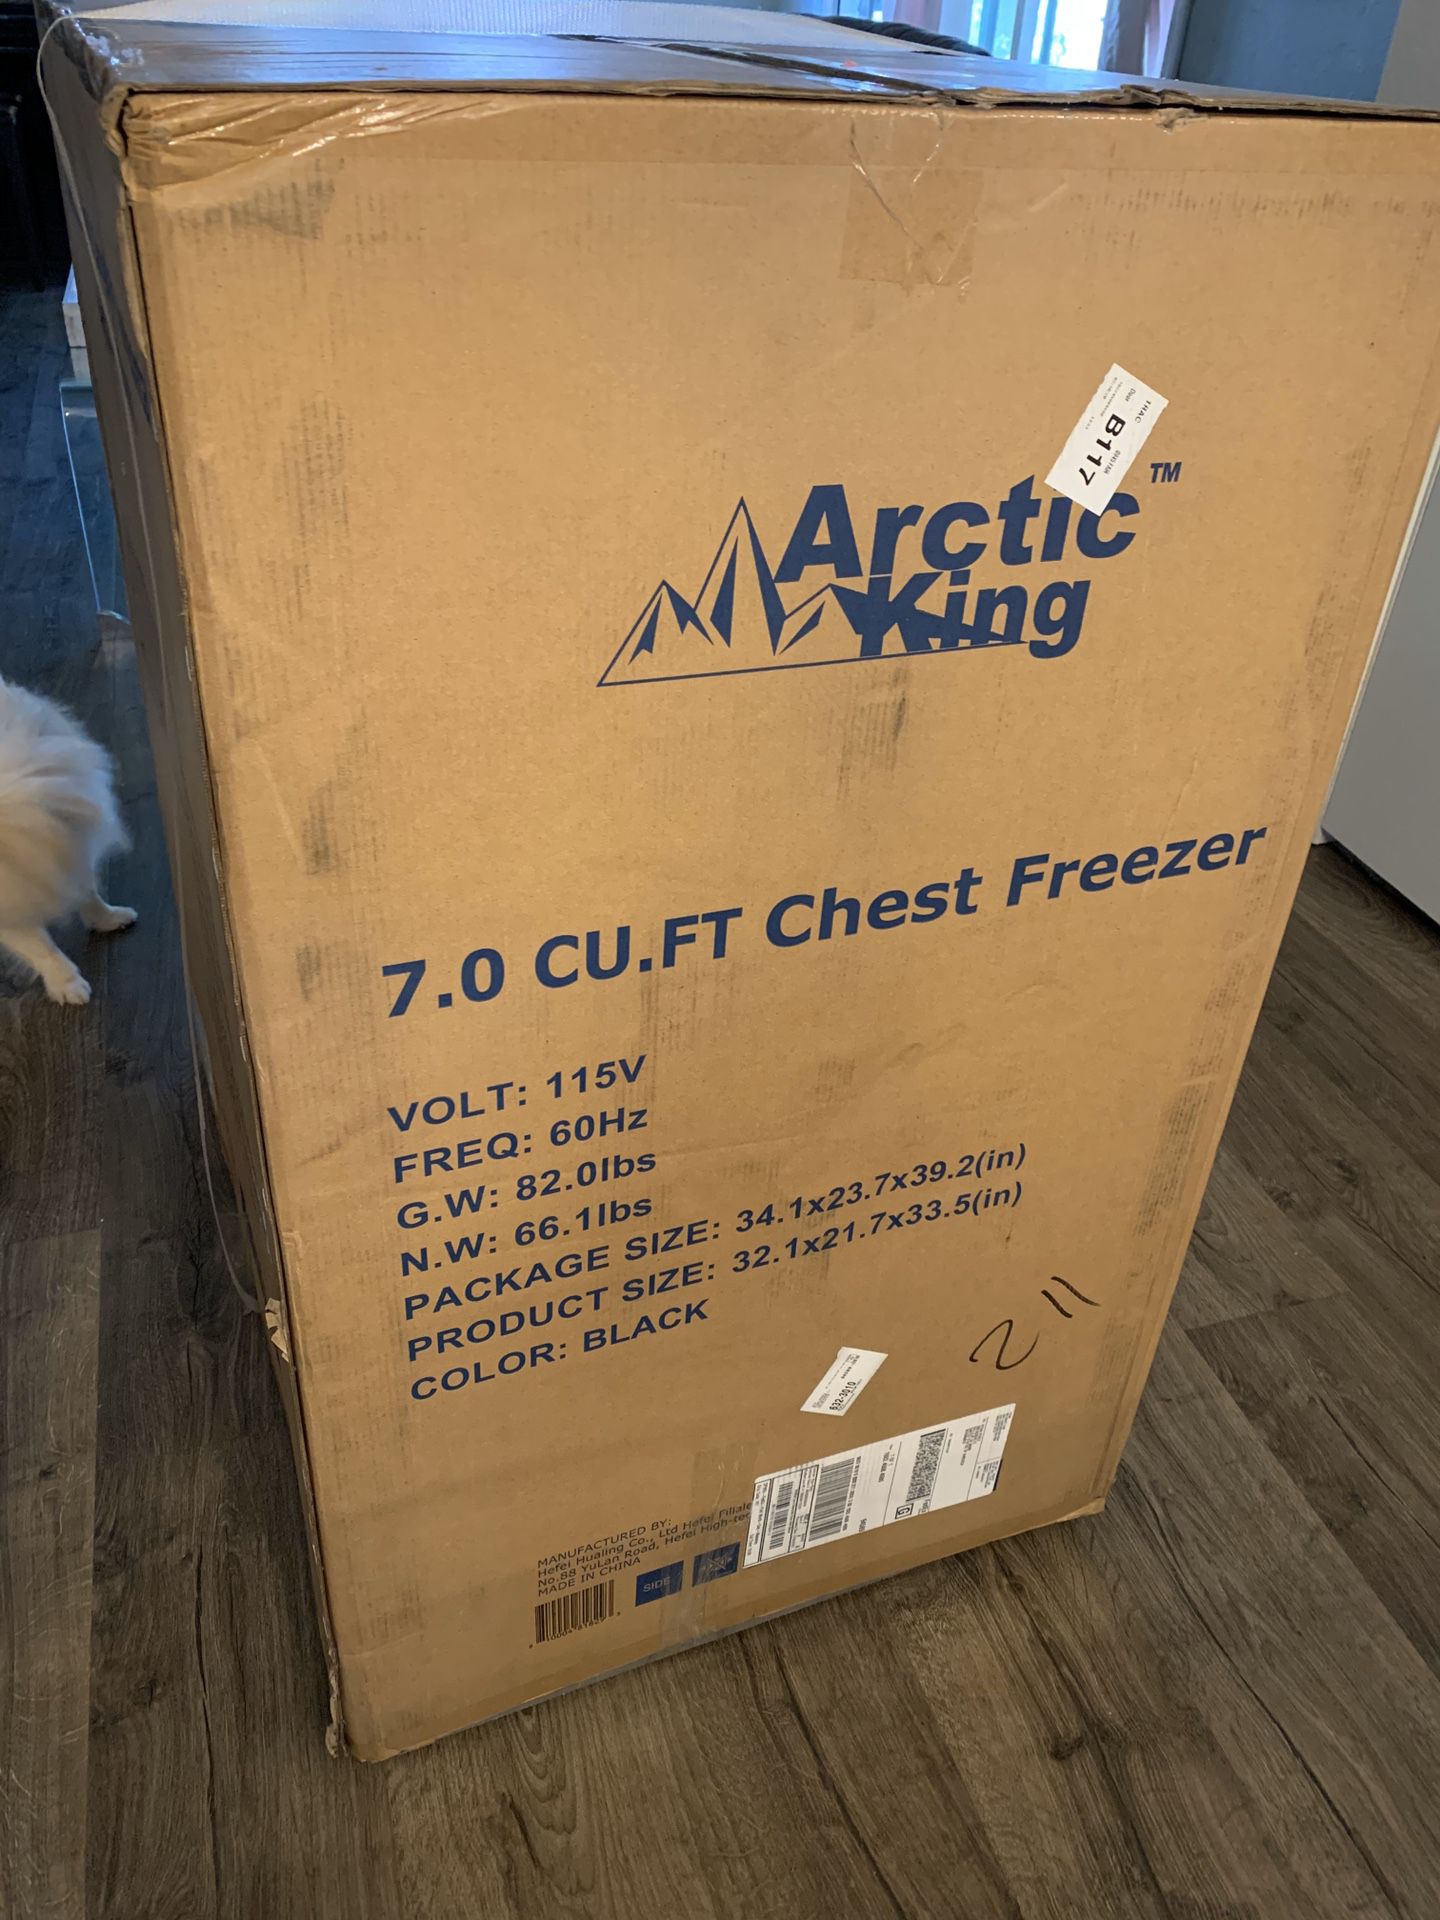 Artic King 7cu.ft chest freezer